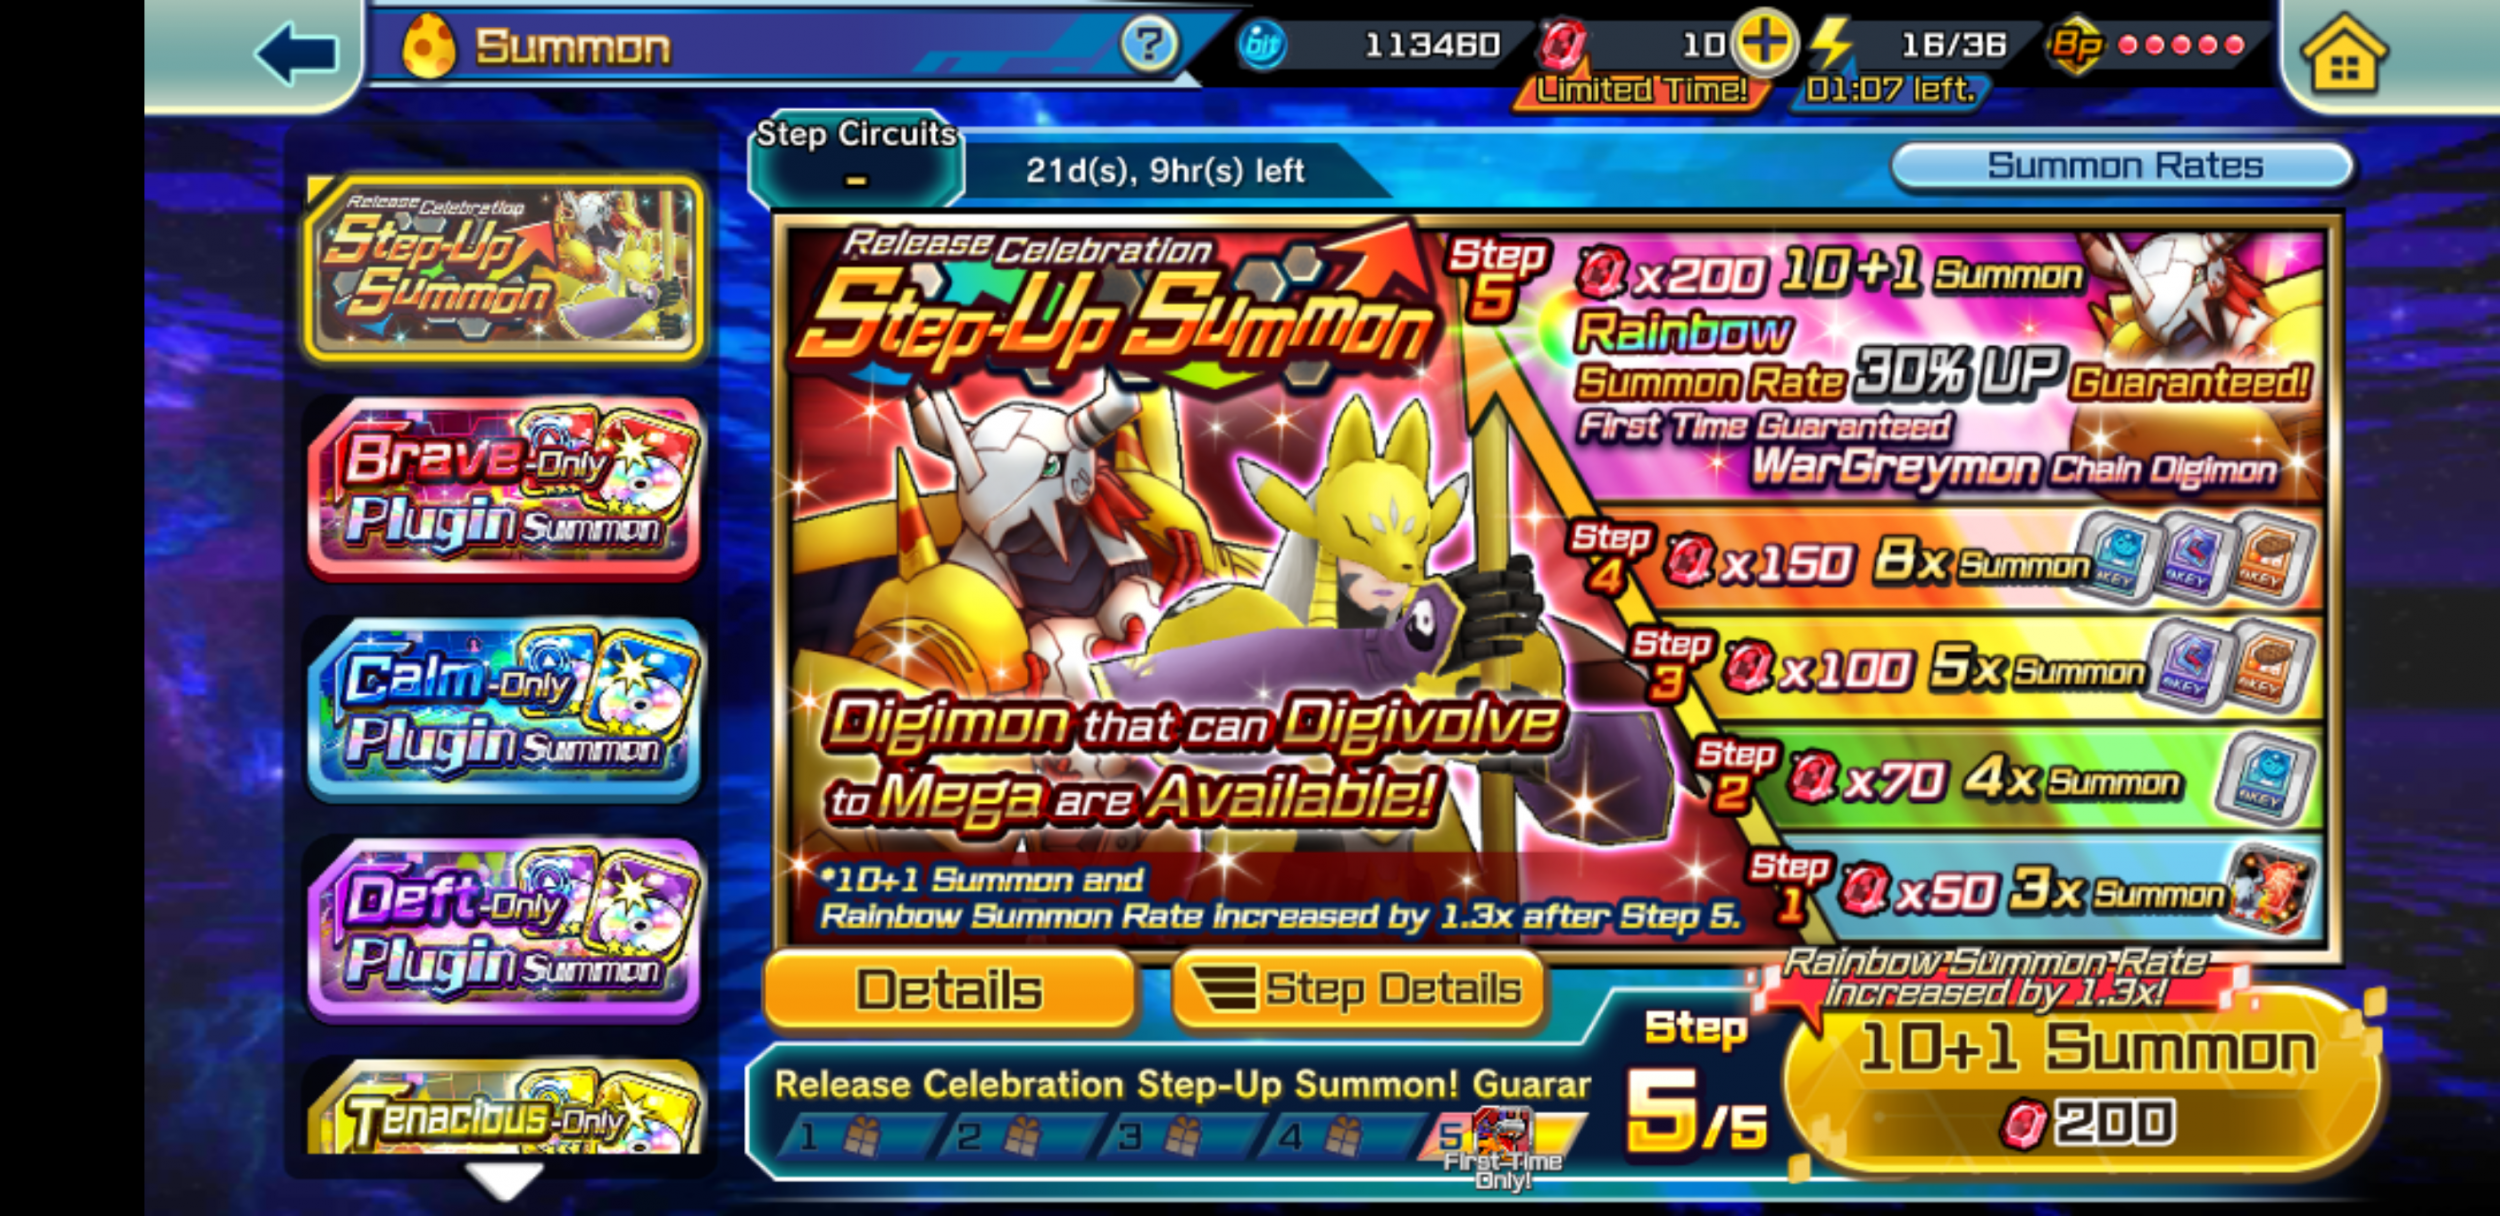 Digimon Re Digitize Digivolution Chart